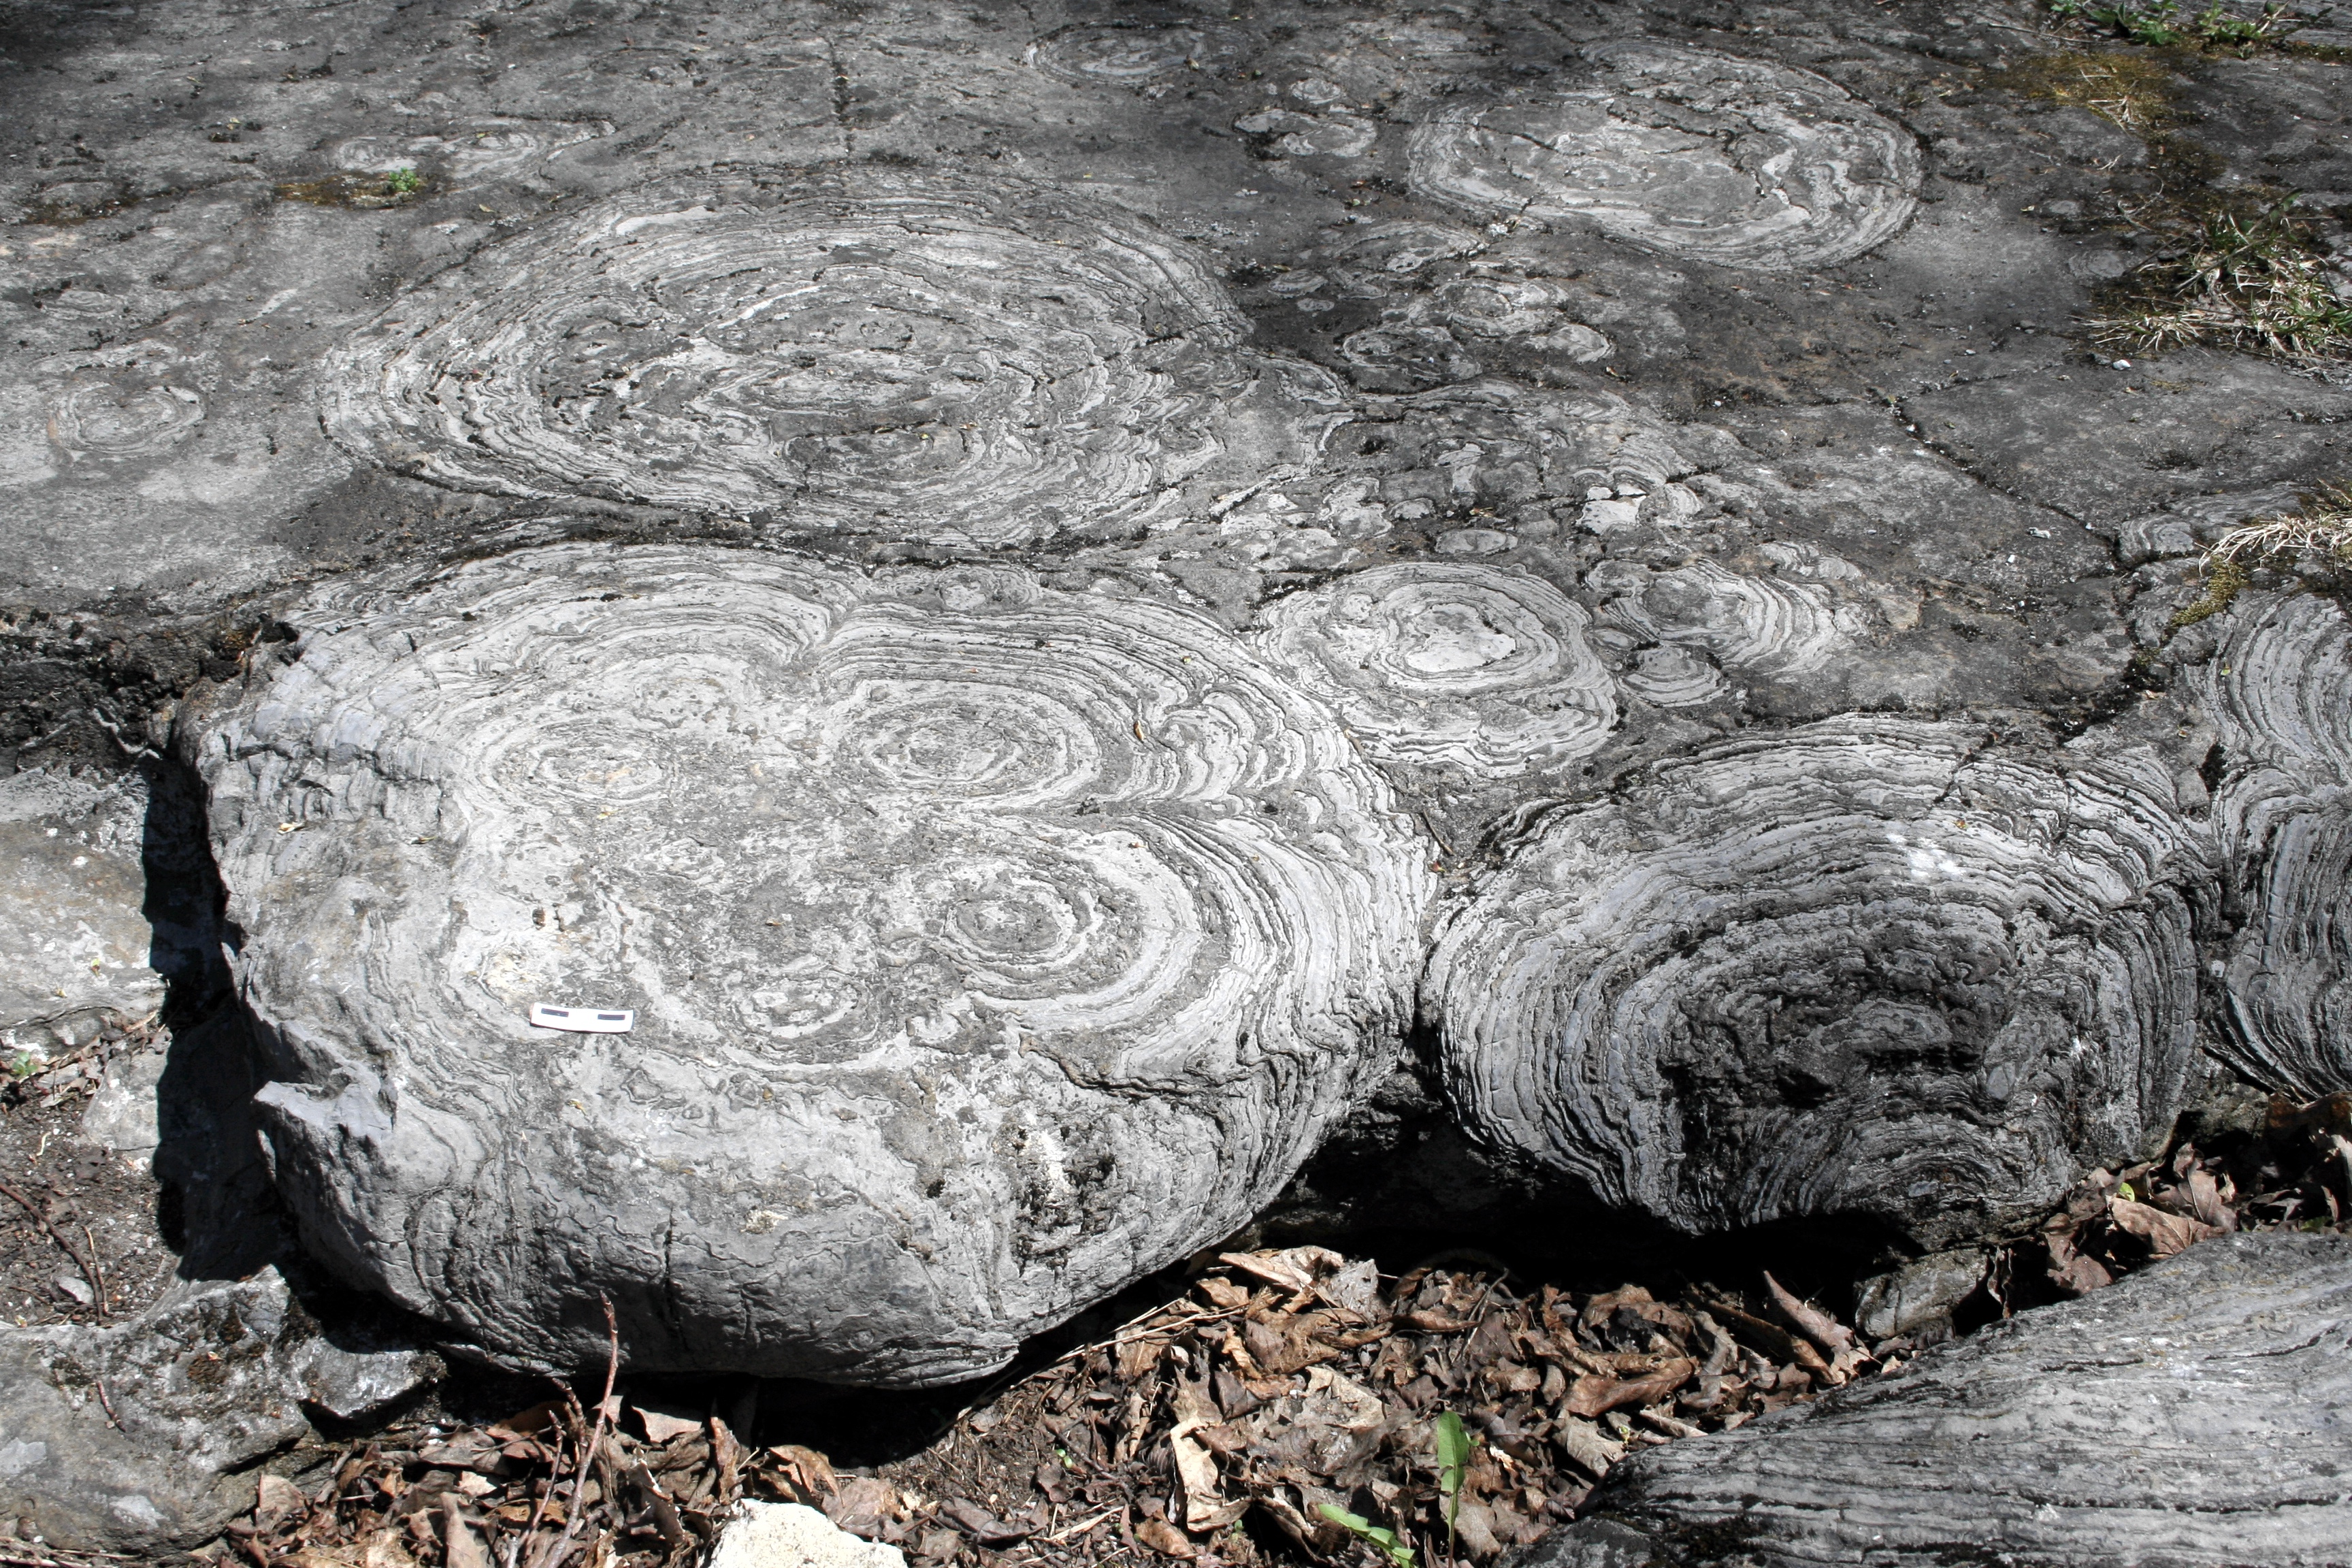 stromatolites0